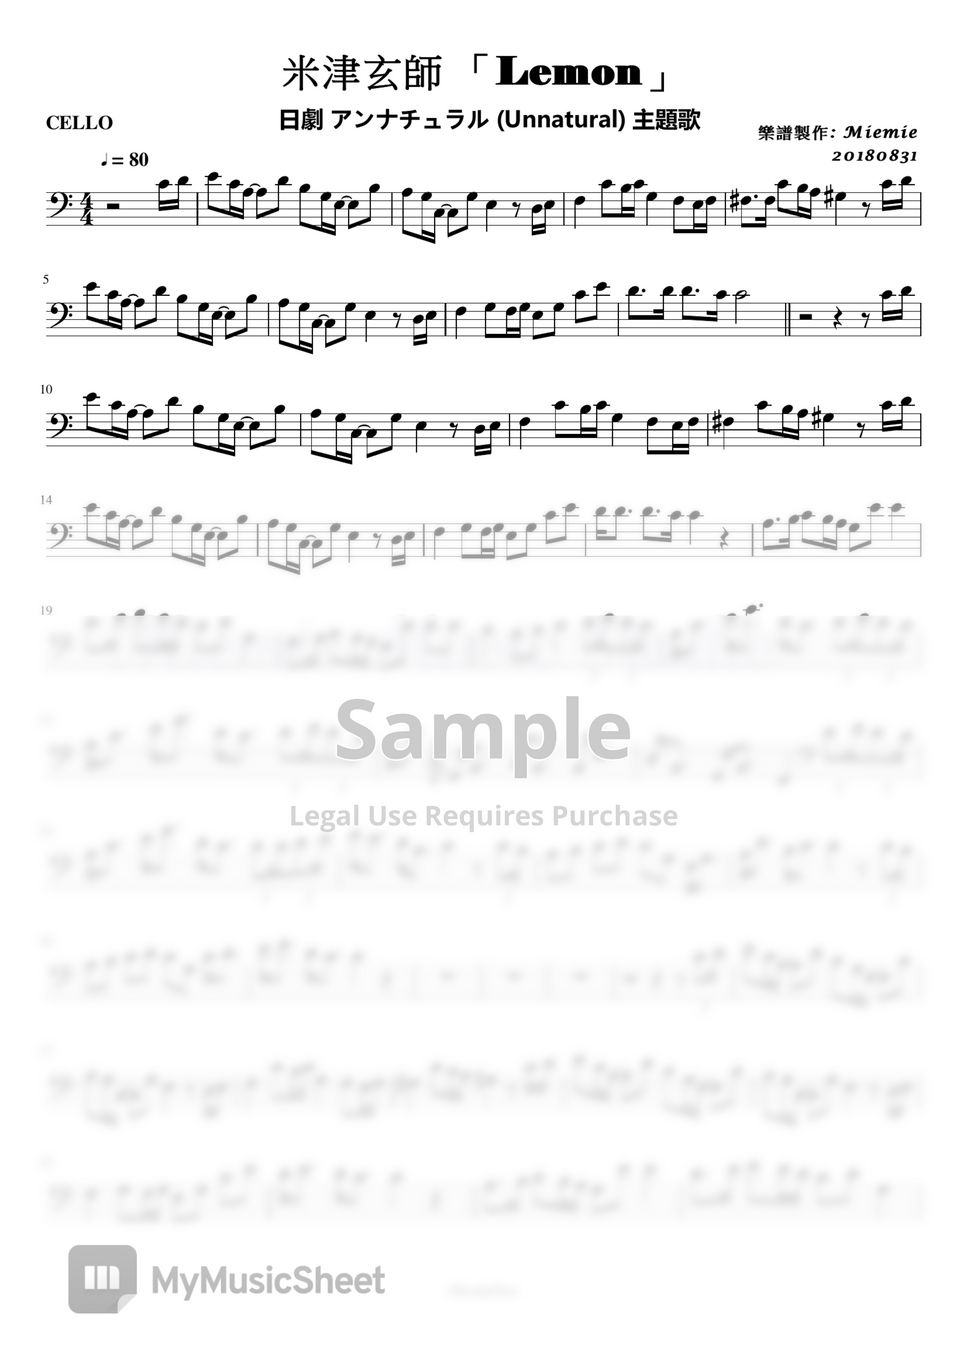 米津玄師 - Lemon (Cello Sheets/大提琴譜) (大提琴) by Miemie Music Studio